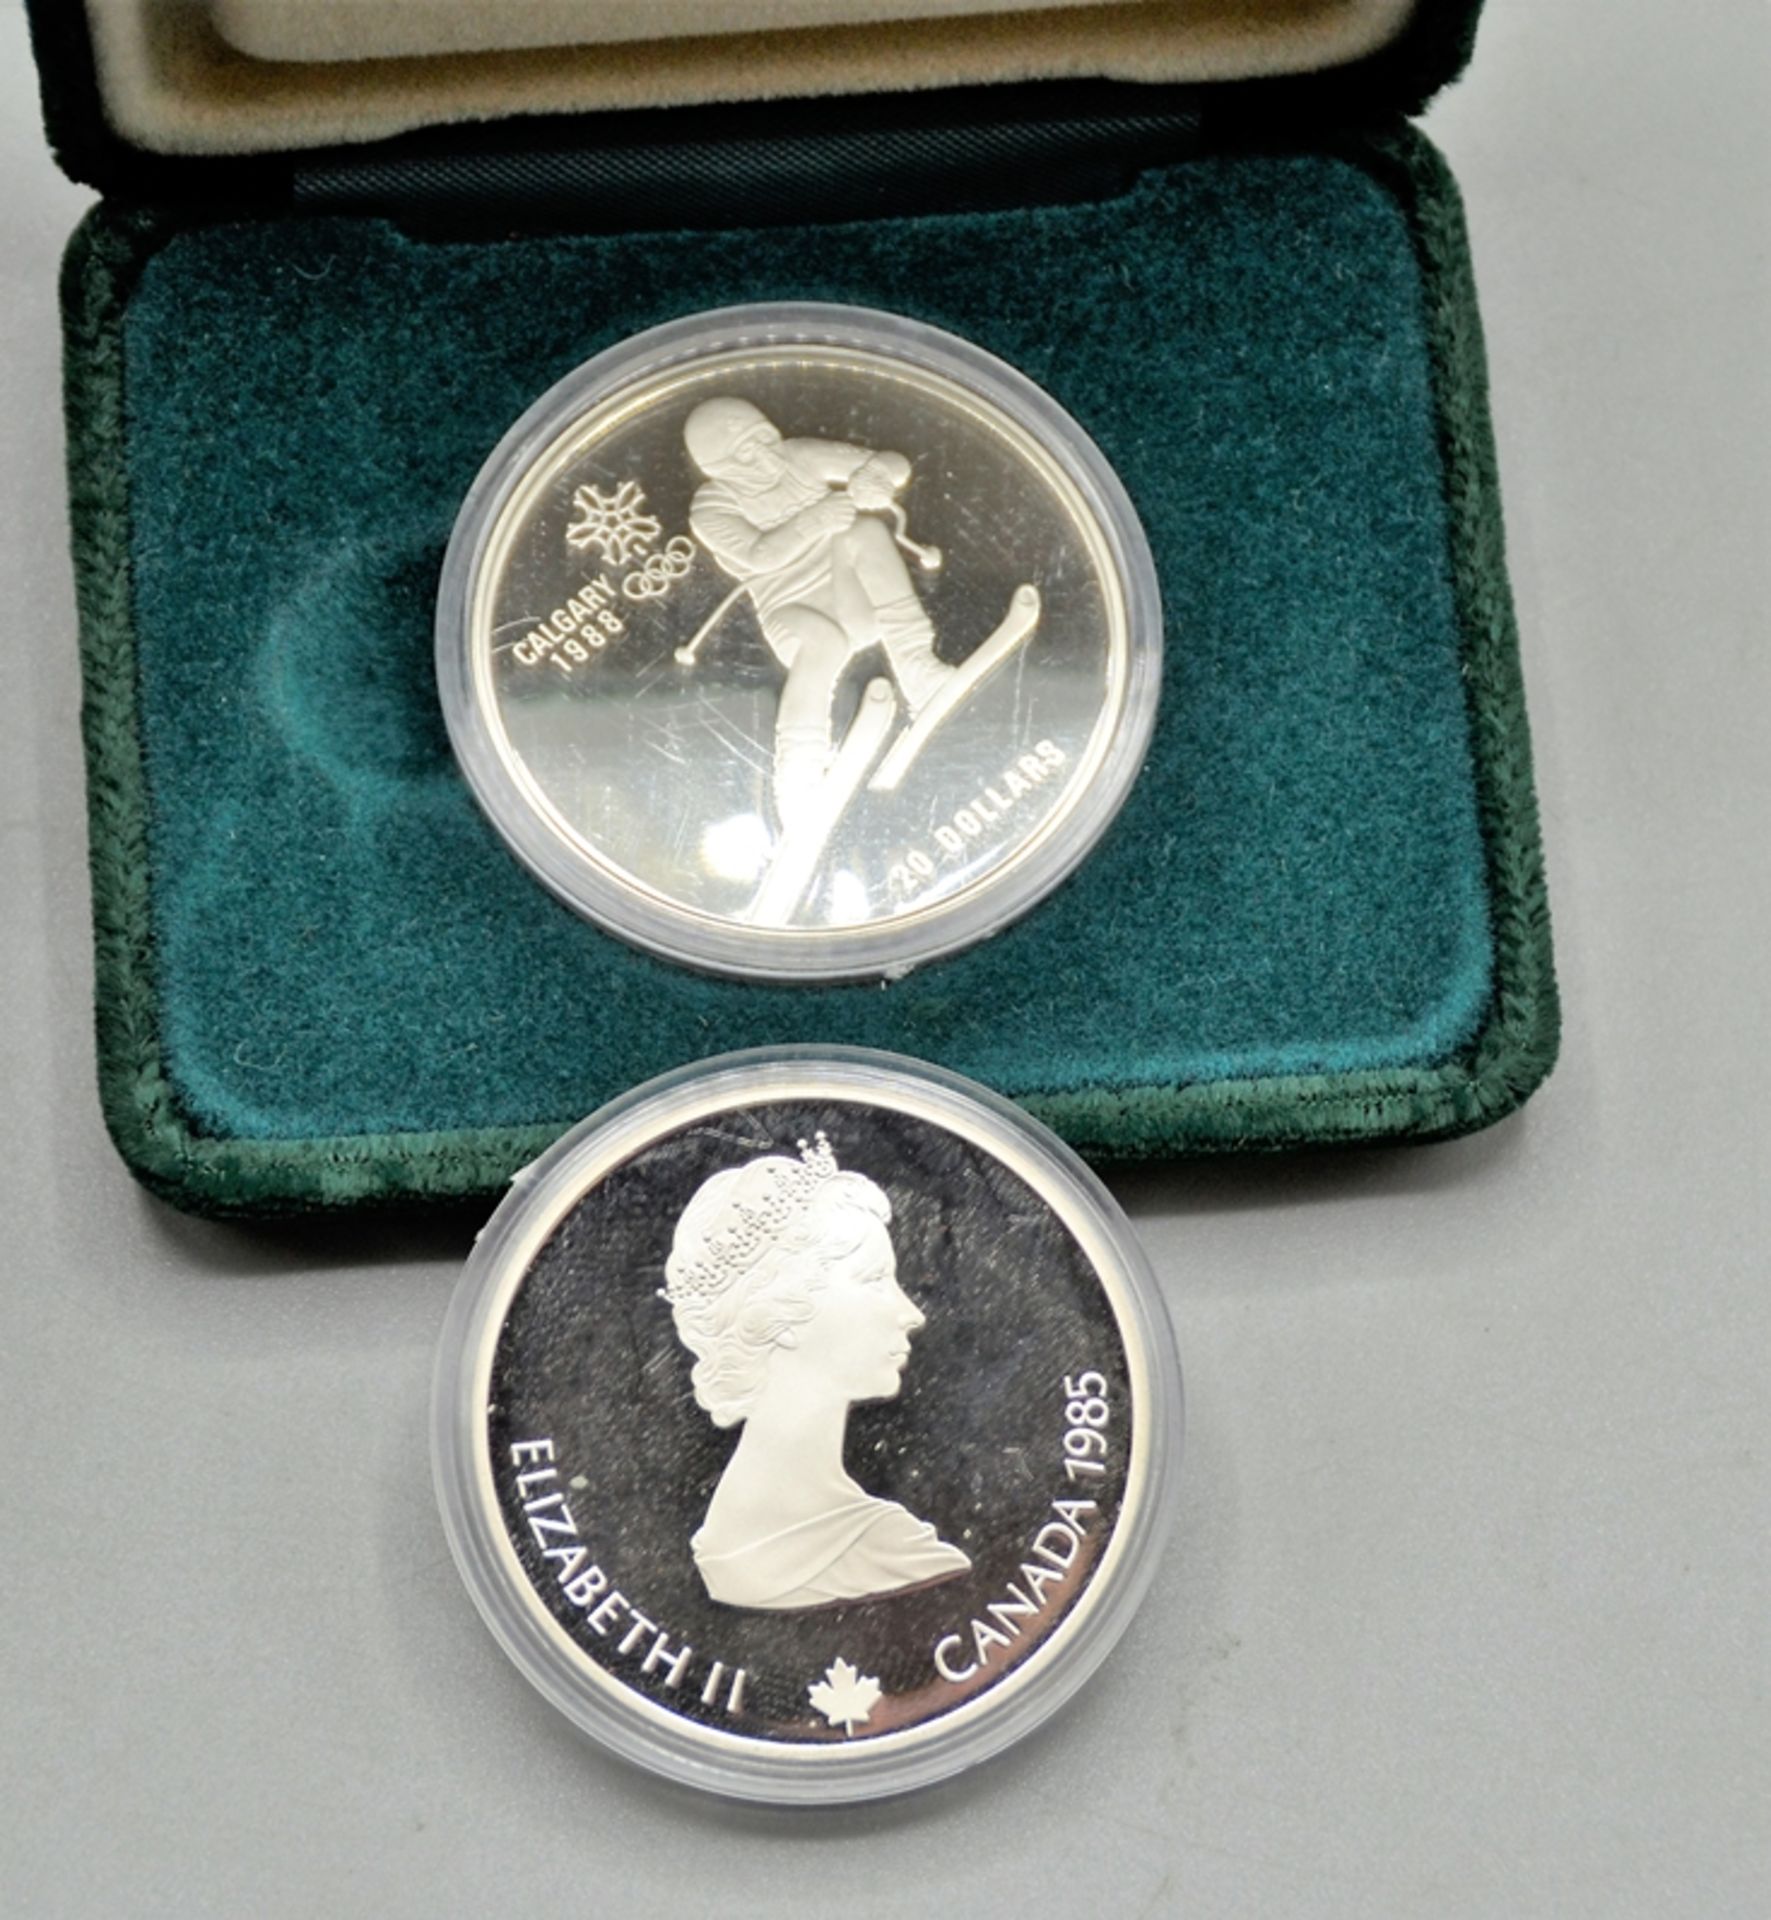 Münzen u. Medaillen Sammlung, darunter 2 x 20 Dollars Canada 1985 Calgary 1988 Silber, Kennedy Half - Image 3 of 3